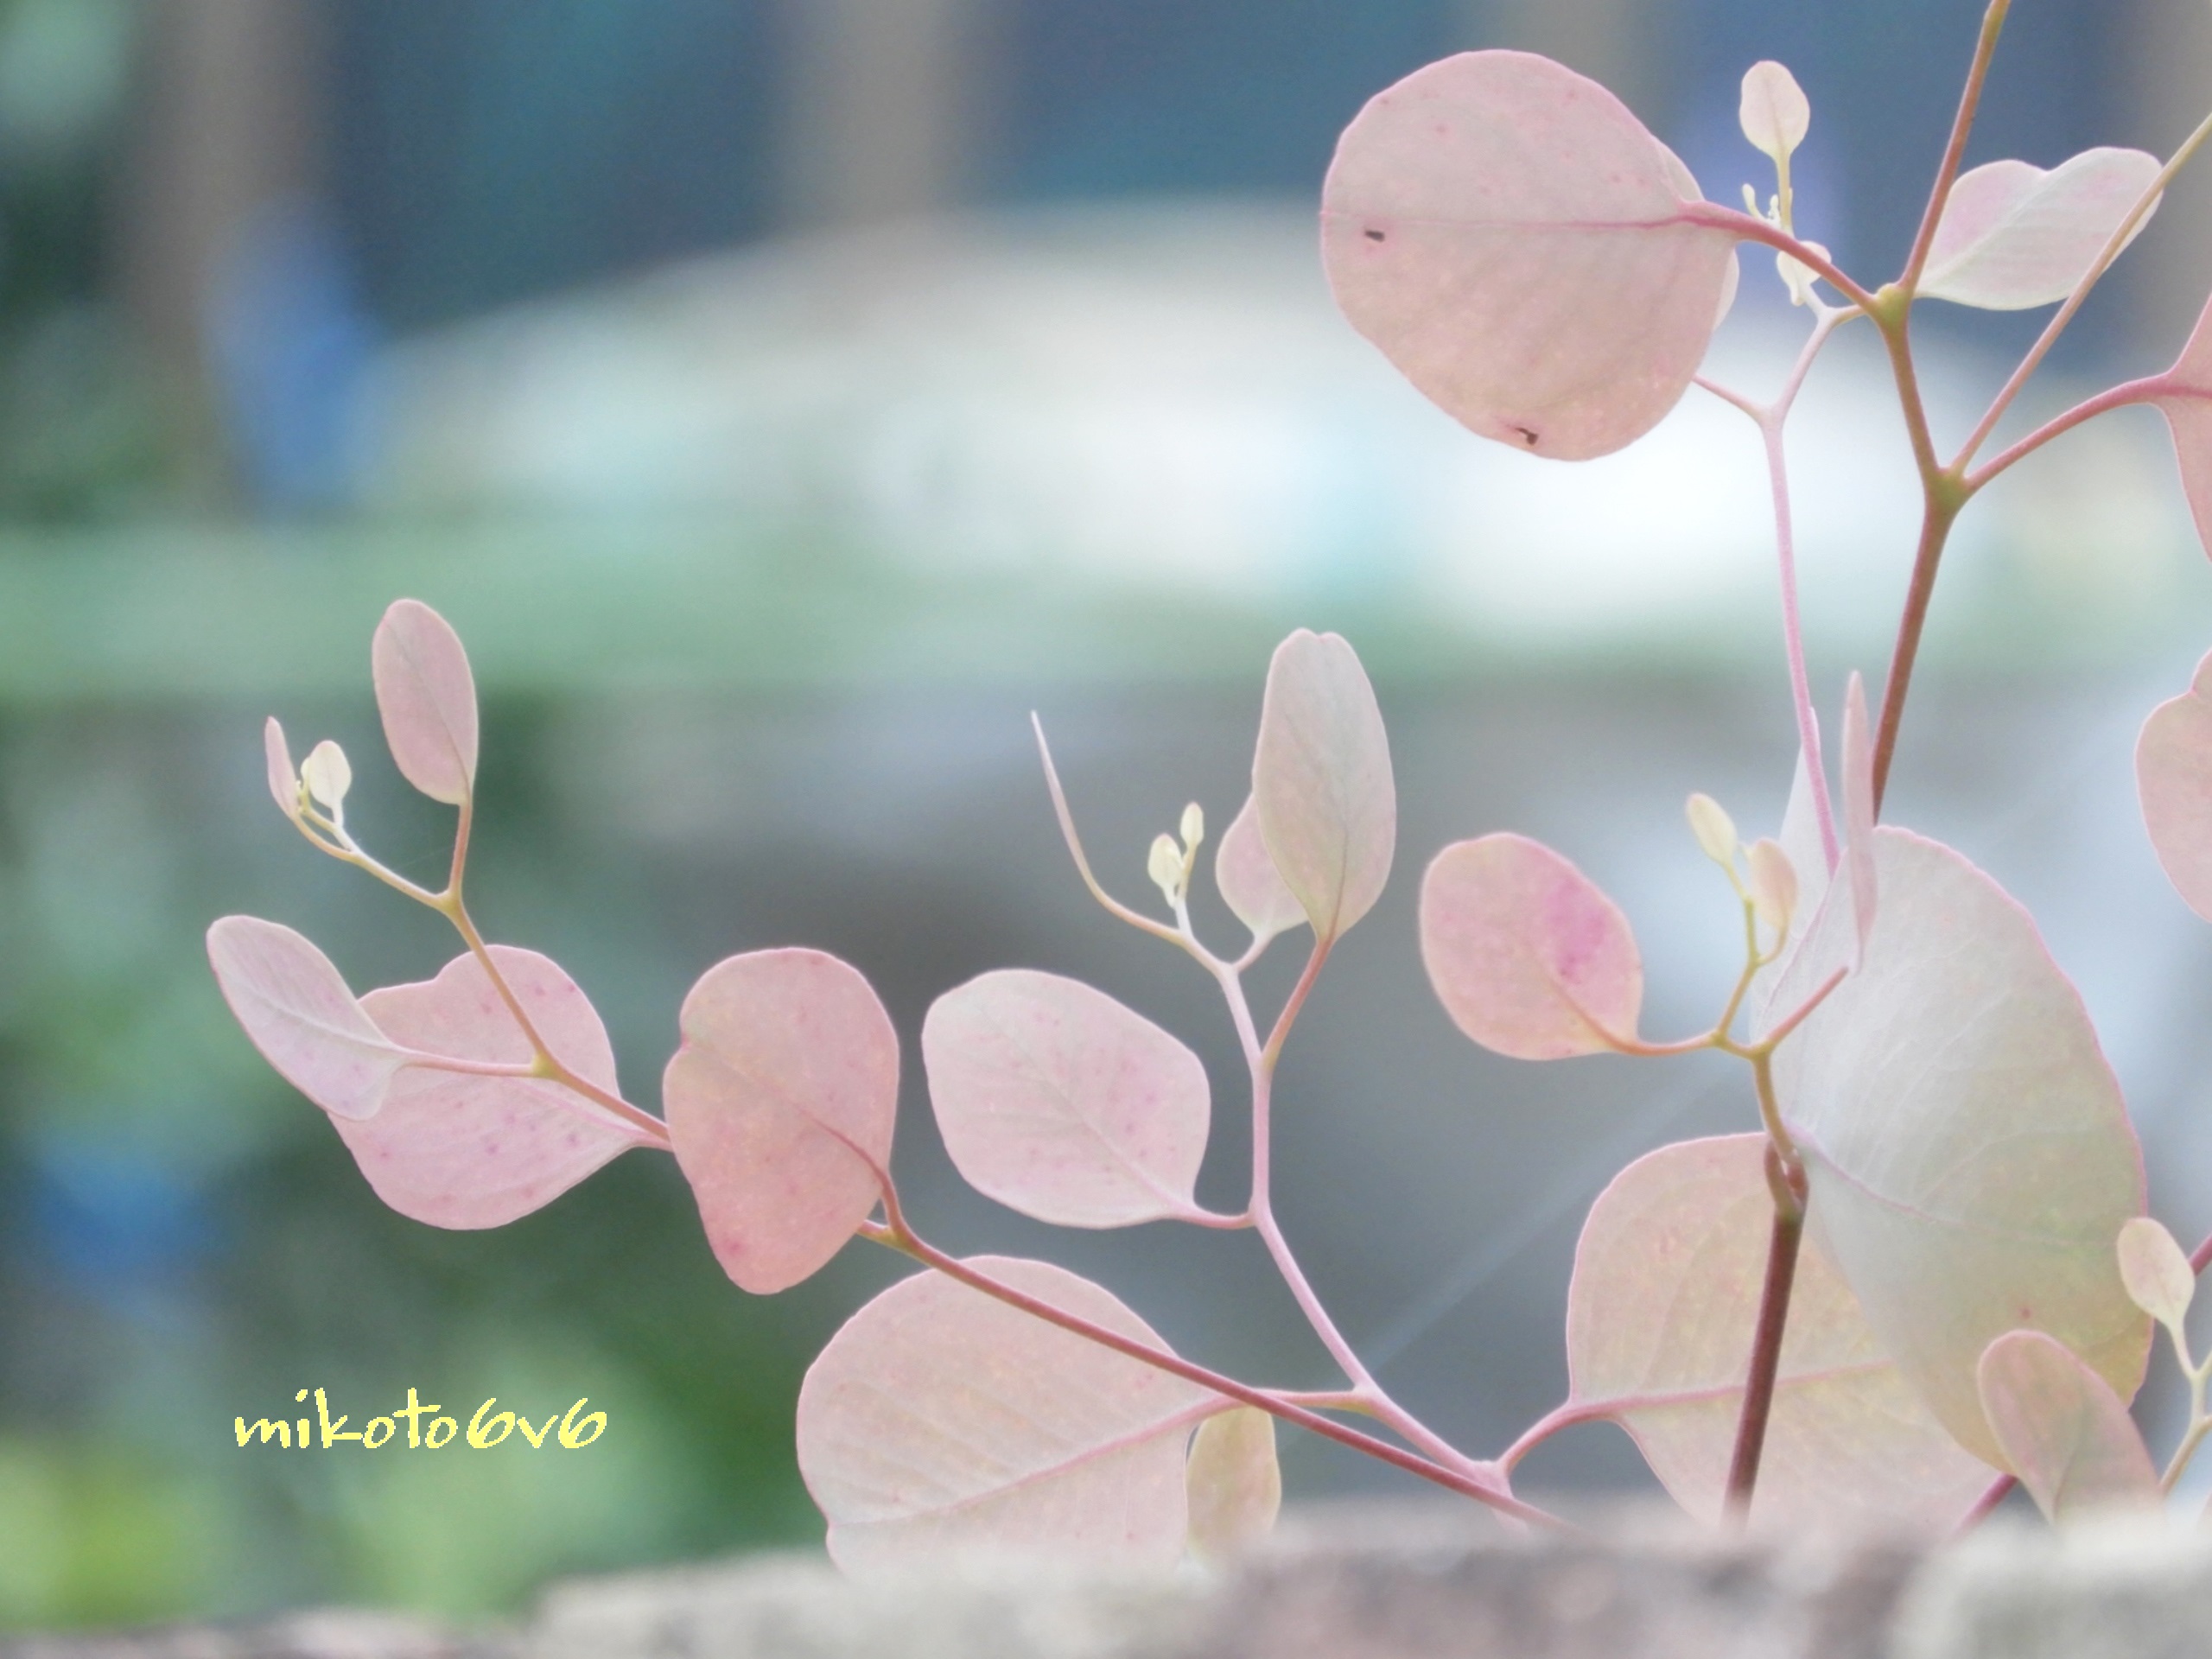 Mikoto 丸い葉っぱと小さな新芽 薄いピンクが優しい感じ 可愛いなぁ 花言葉 新生 再生 思い出 記憶 追憶 慰め 永遠の幸せ ユーカリ ポポラス 丸葉ユーカリ ポポラスリーフ キリトリセカイ Eucalyptus Polyanthemos Leaves Nikon